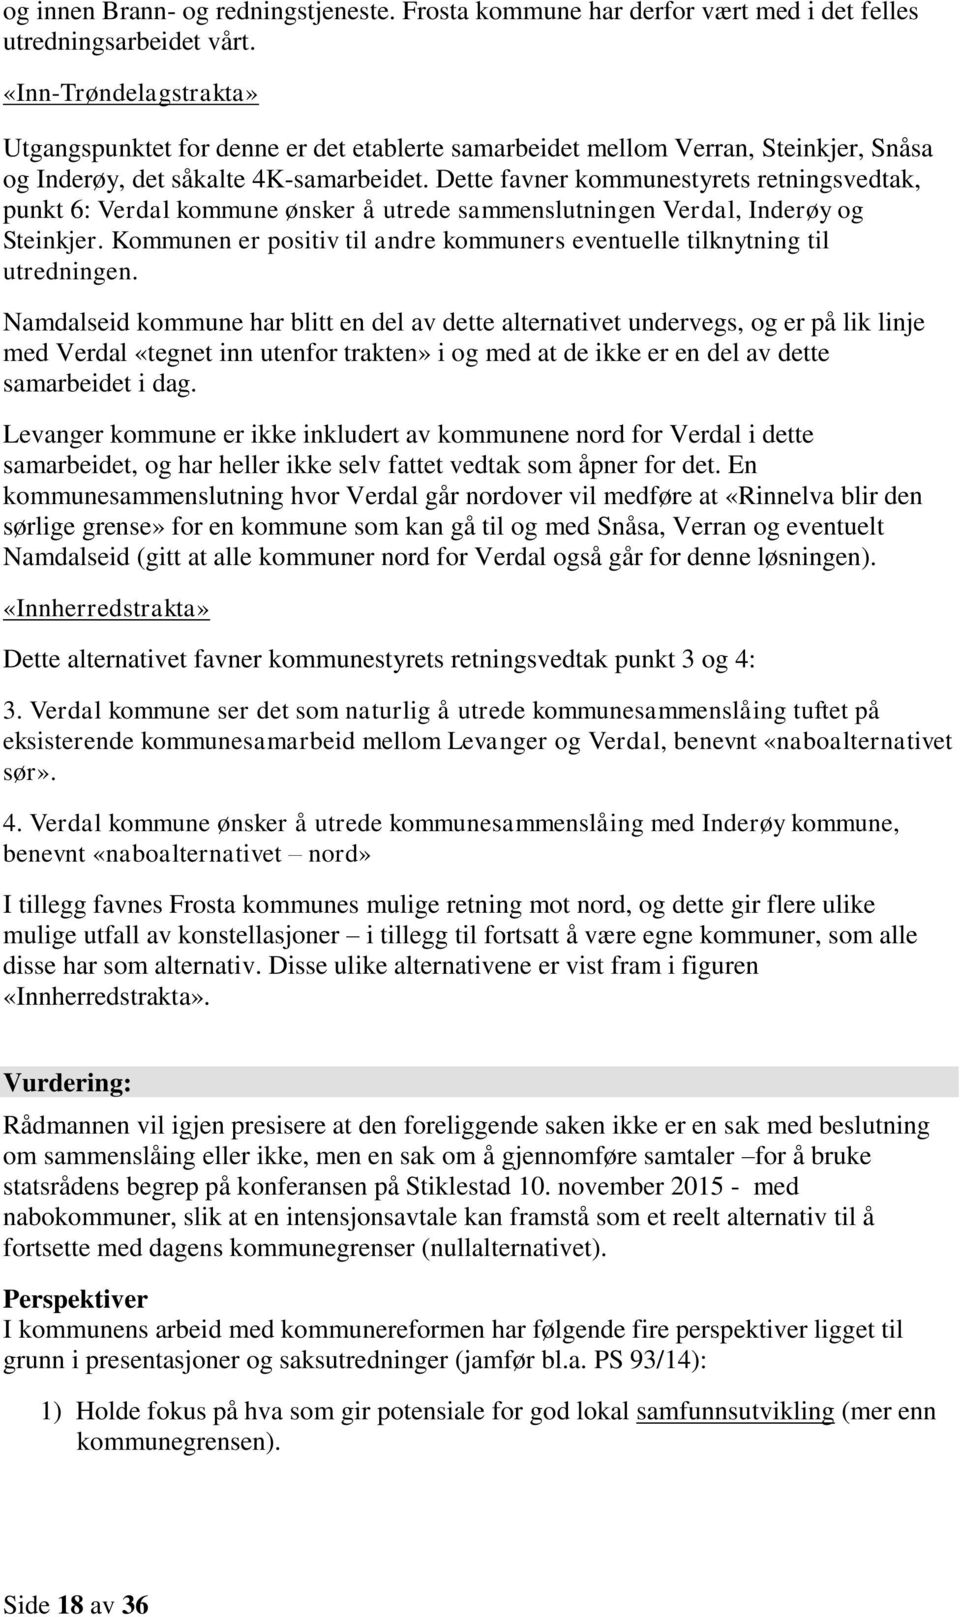 Dette favner kommunestyrets retningsvedtak, punkt 6: Verdal kommune ønsker å utrede sammenslutningen Verdal, Inderøy og Steinkjer.